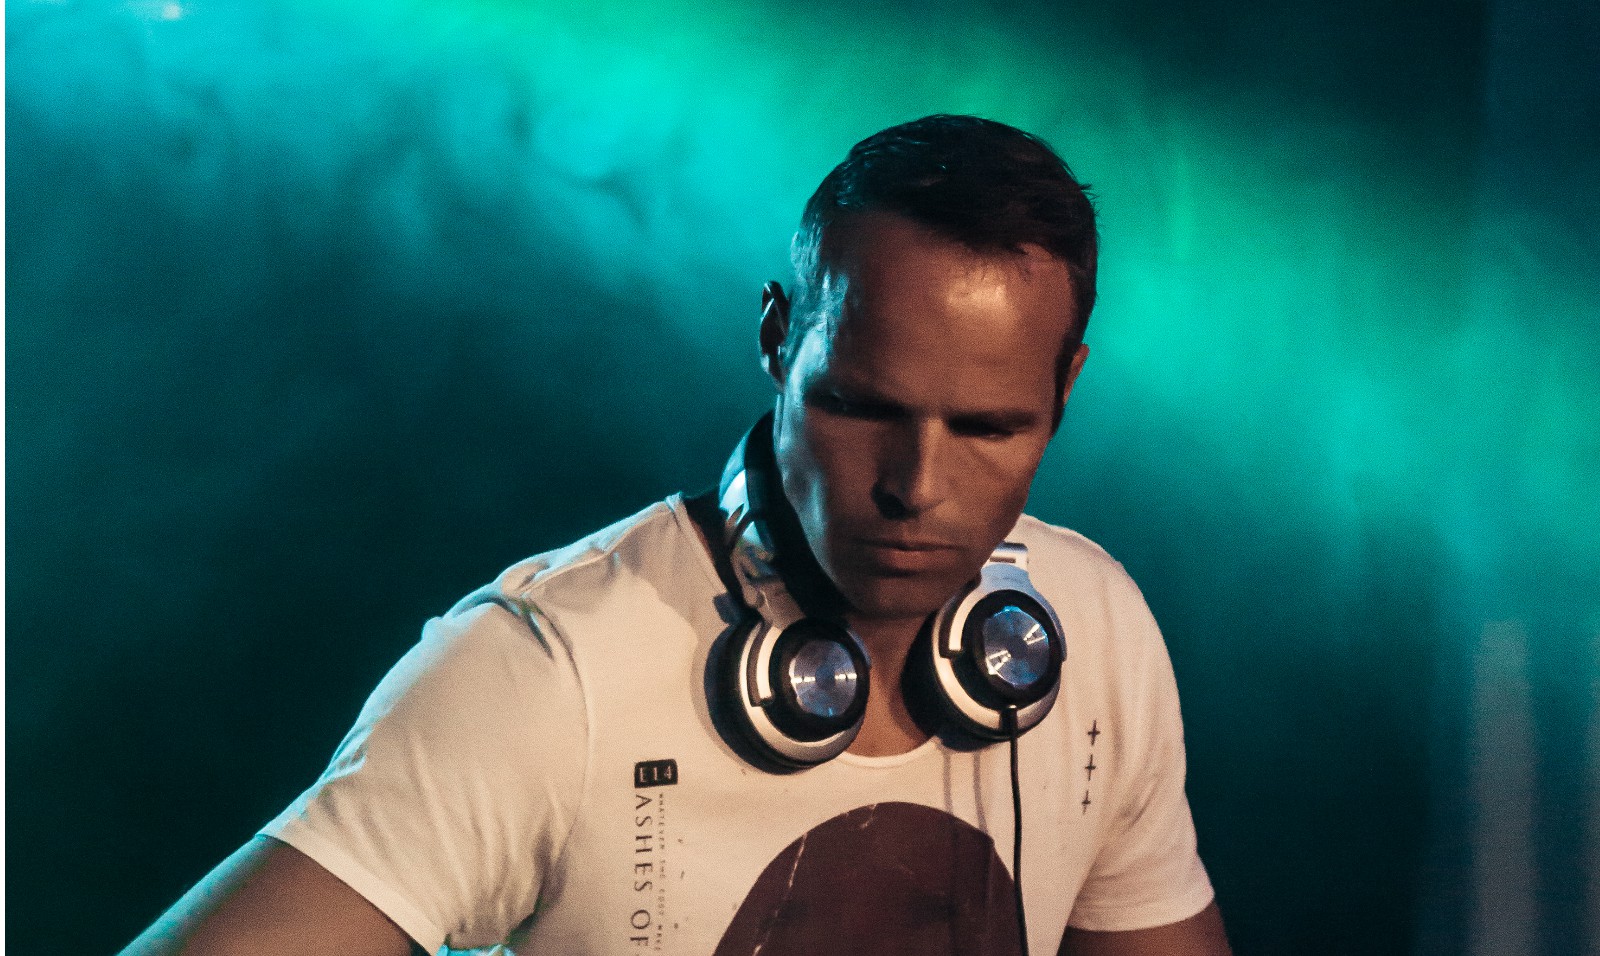 DJ Marc Bakker